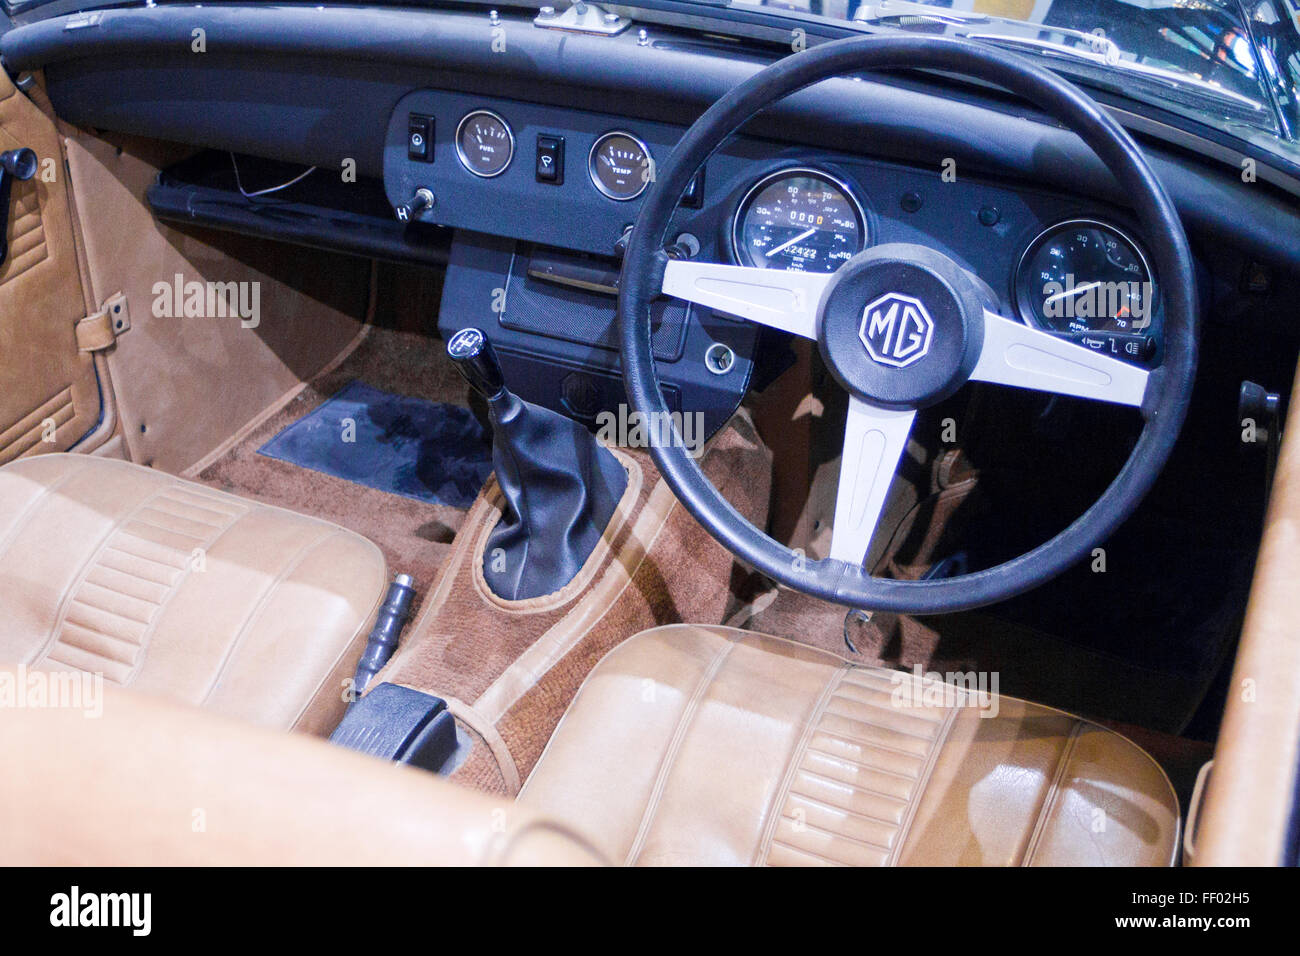 Interior of a 1979 MG Midget Classic British Sports Car, UK Stock Photo